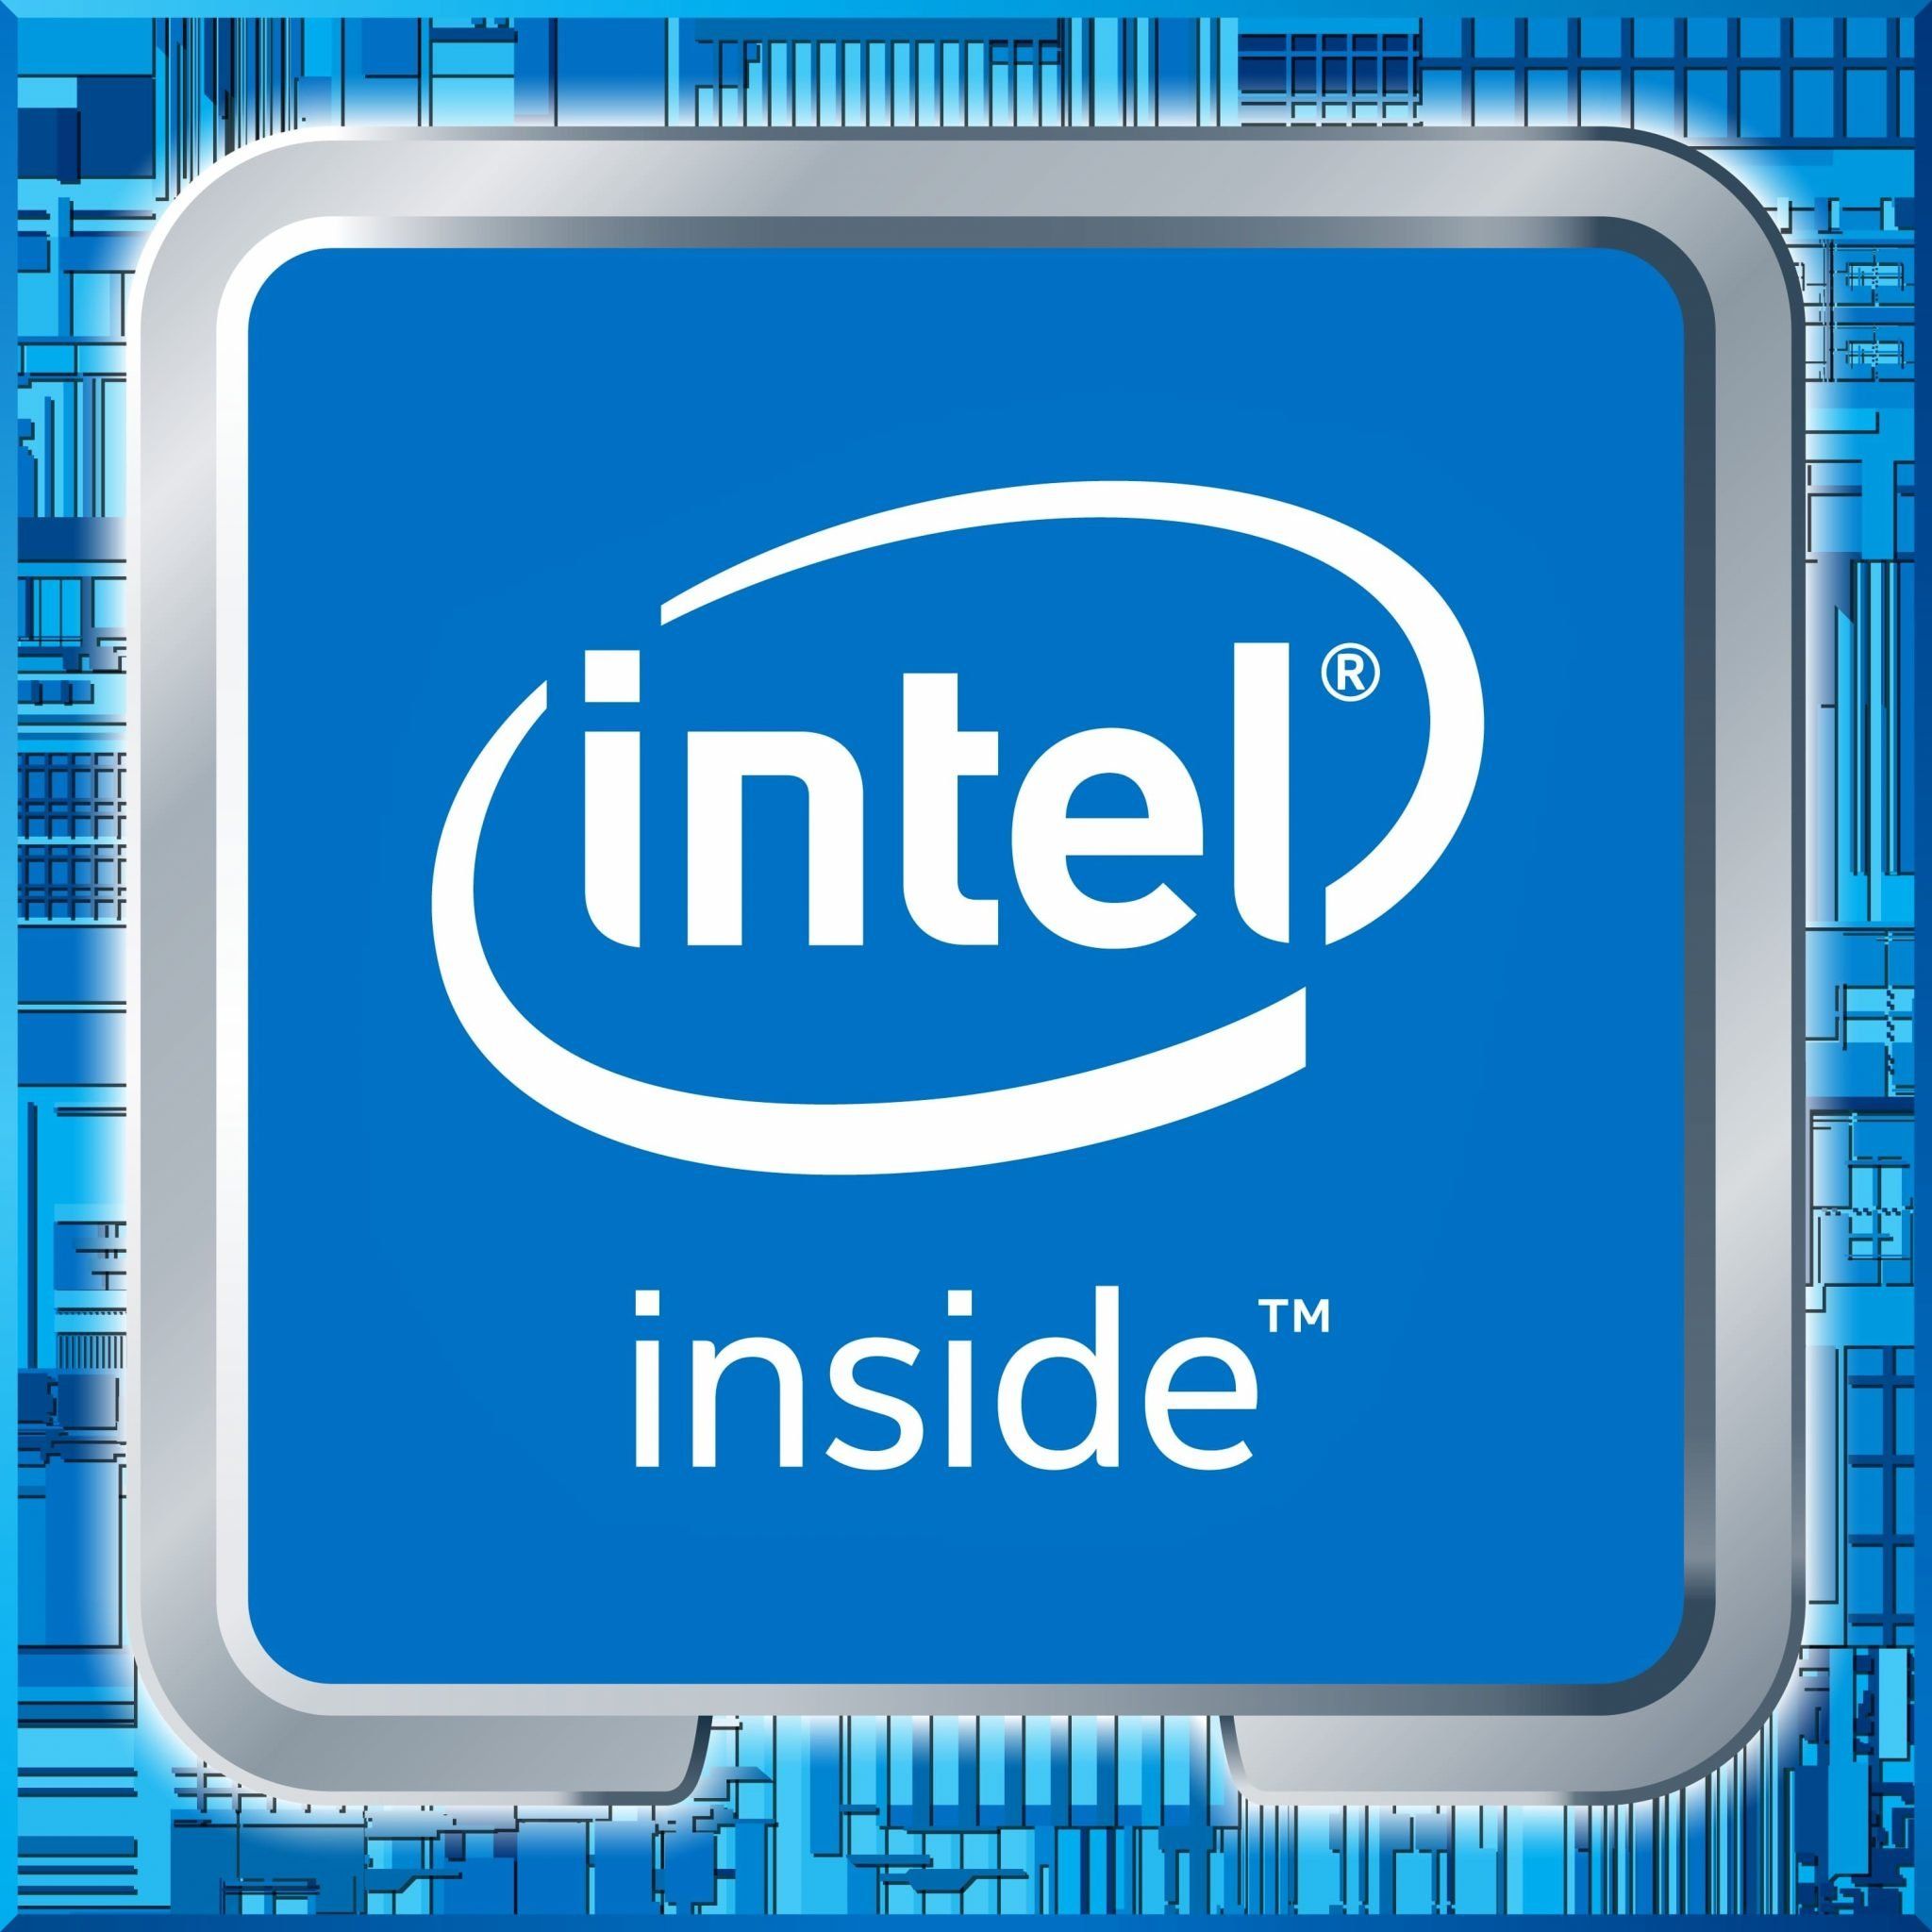 Intel programs. Intel inside Core i7 logo. Интел пентиум инсайд. Intel Celeron inside logo. Процессор Intel inside.